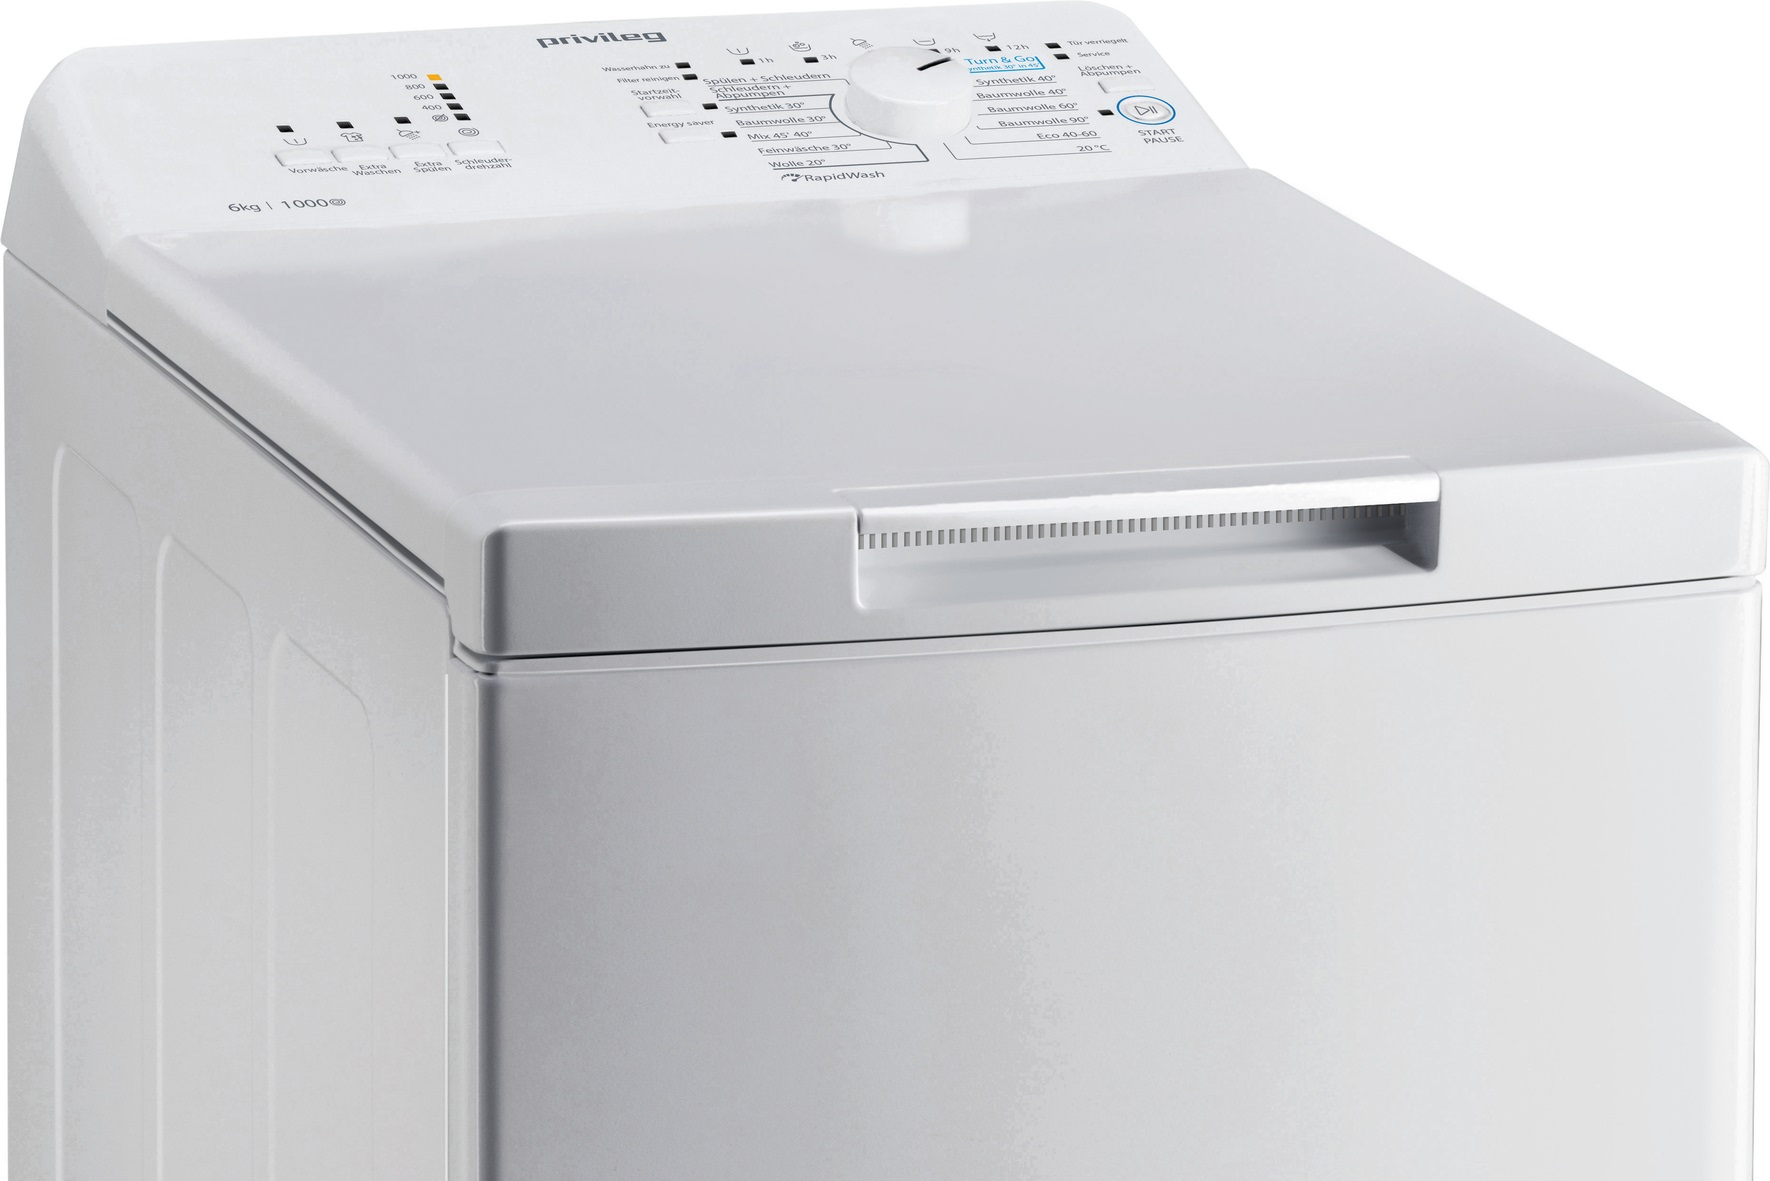 DE/N L60300 951 kg, U/Min., PRIVILEG Waschmaschine (6 D) PWT